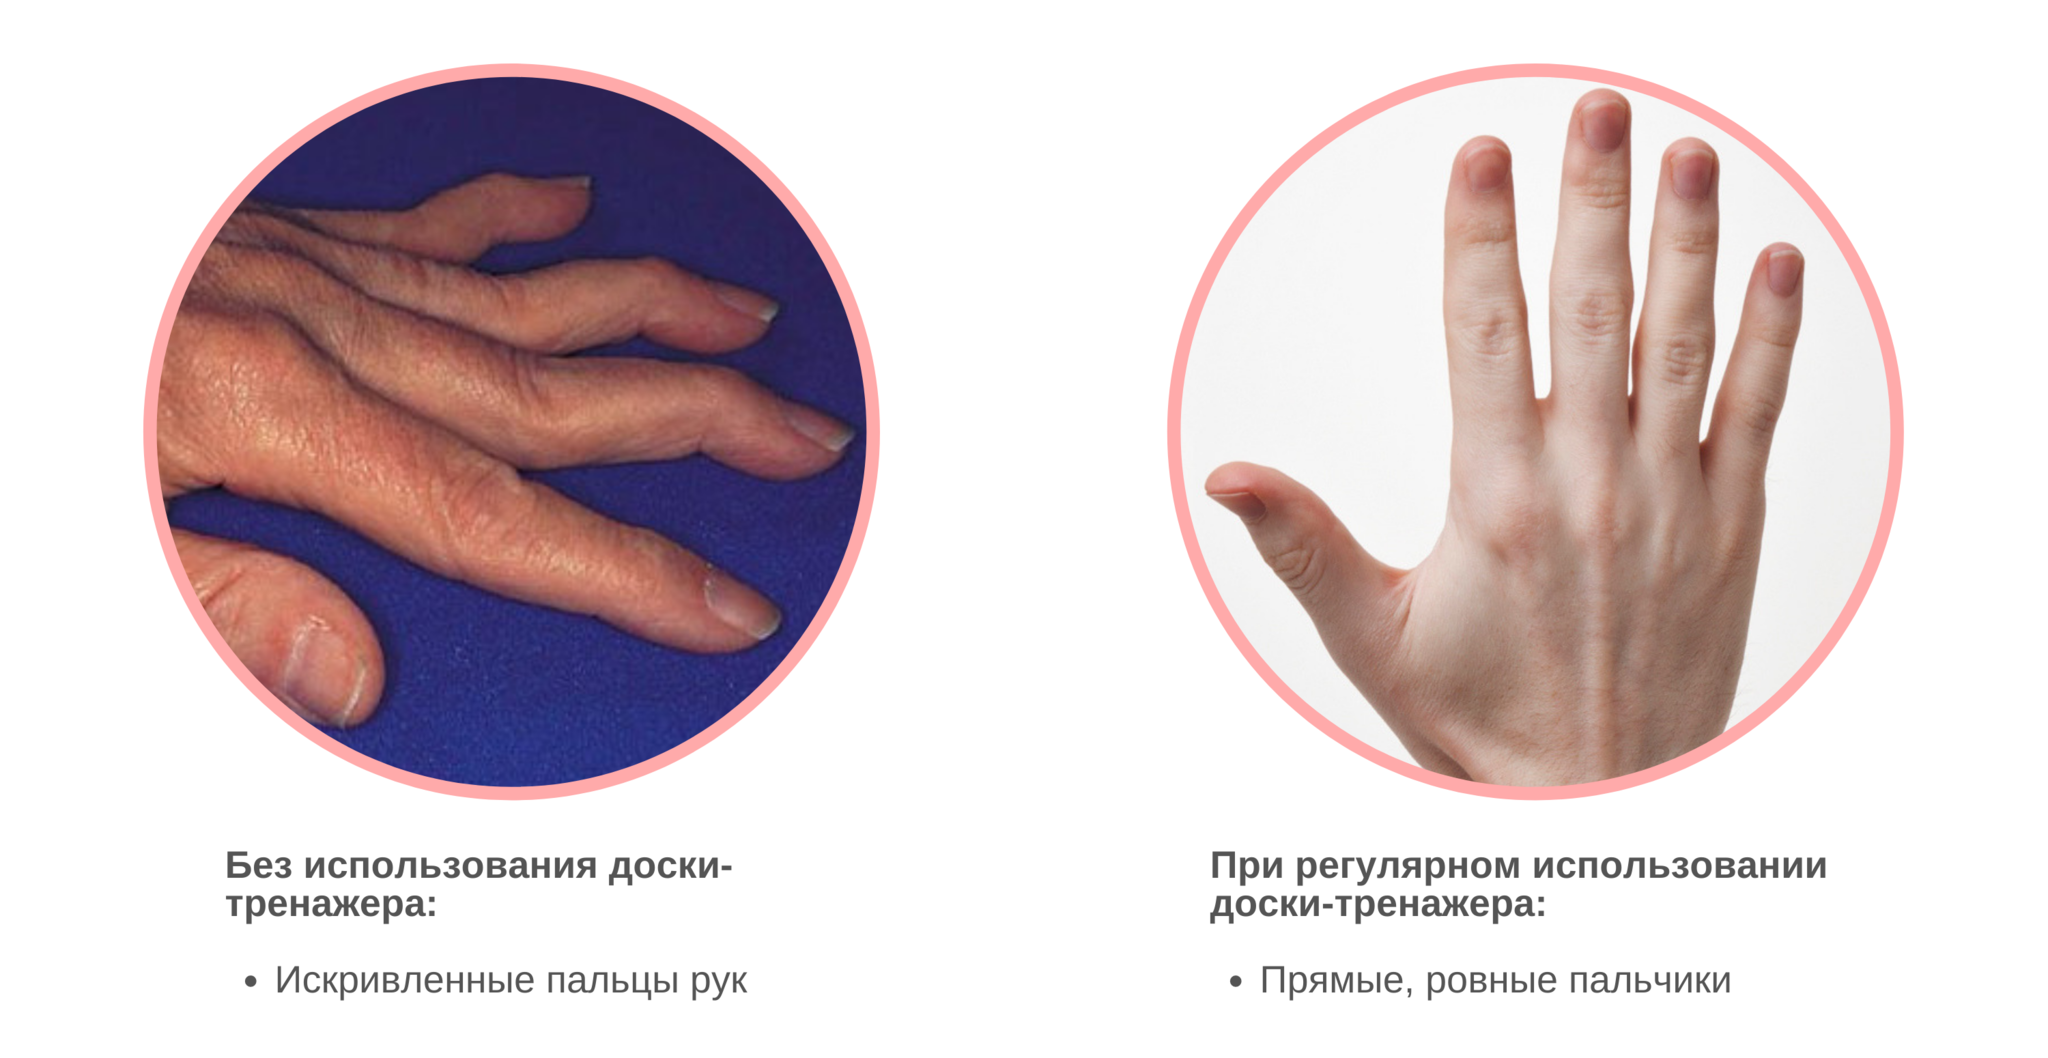 Почему пальцы можно. Выпрямление пальца на руке. Тренажер для выпрямления пальцев. Как можно выпрямить пальцы на руках. Штука для выпрямления пальца на руке.